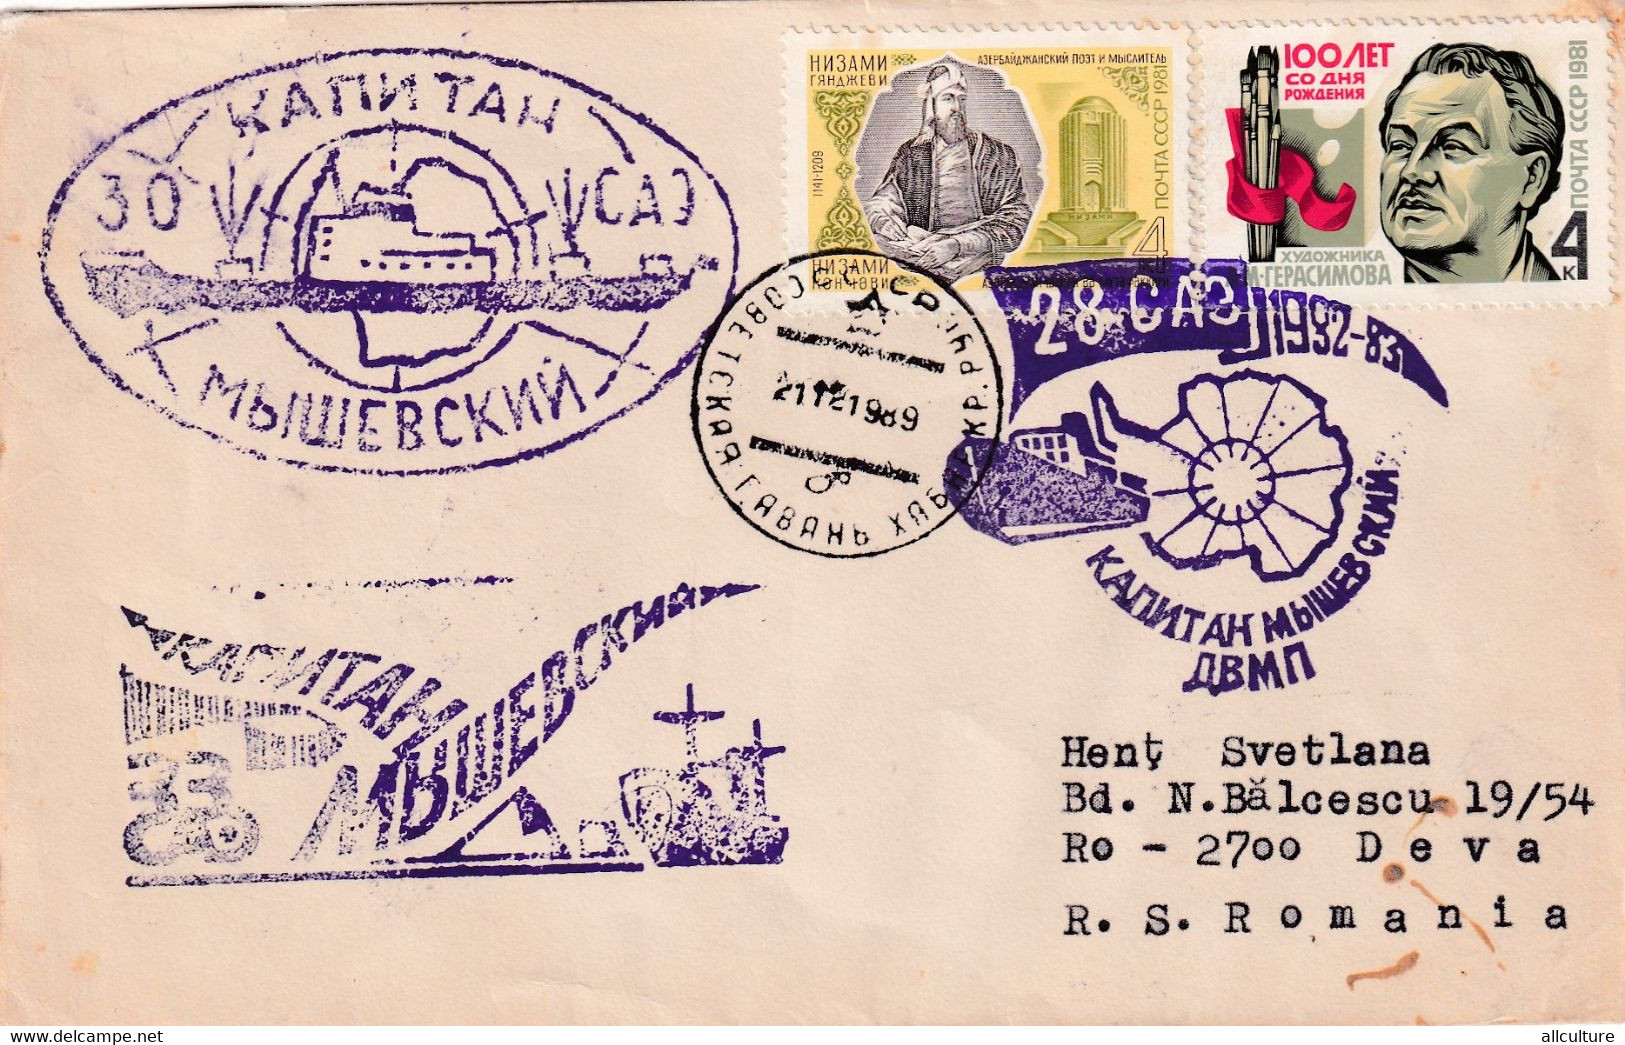 A8130- CAPITAN MYSHEVSKI, 1989 USSR STAMP, USSR MAIL USED STAMP ON THE COVER, SENT TO DEVA ROMANIA - Storia Postale